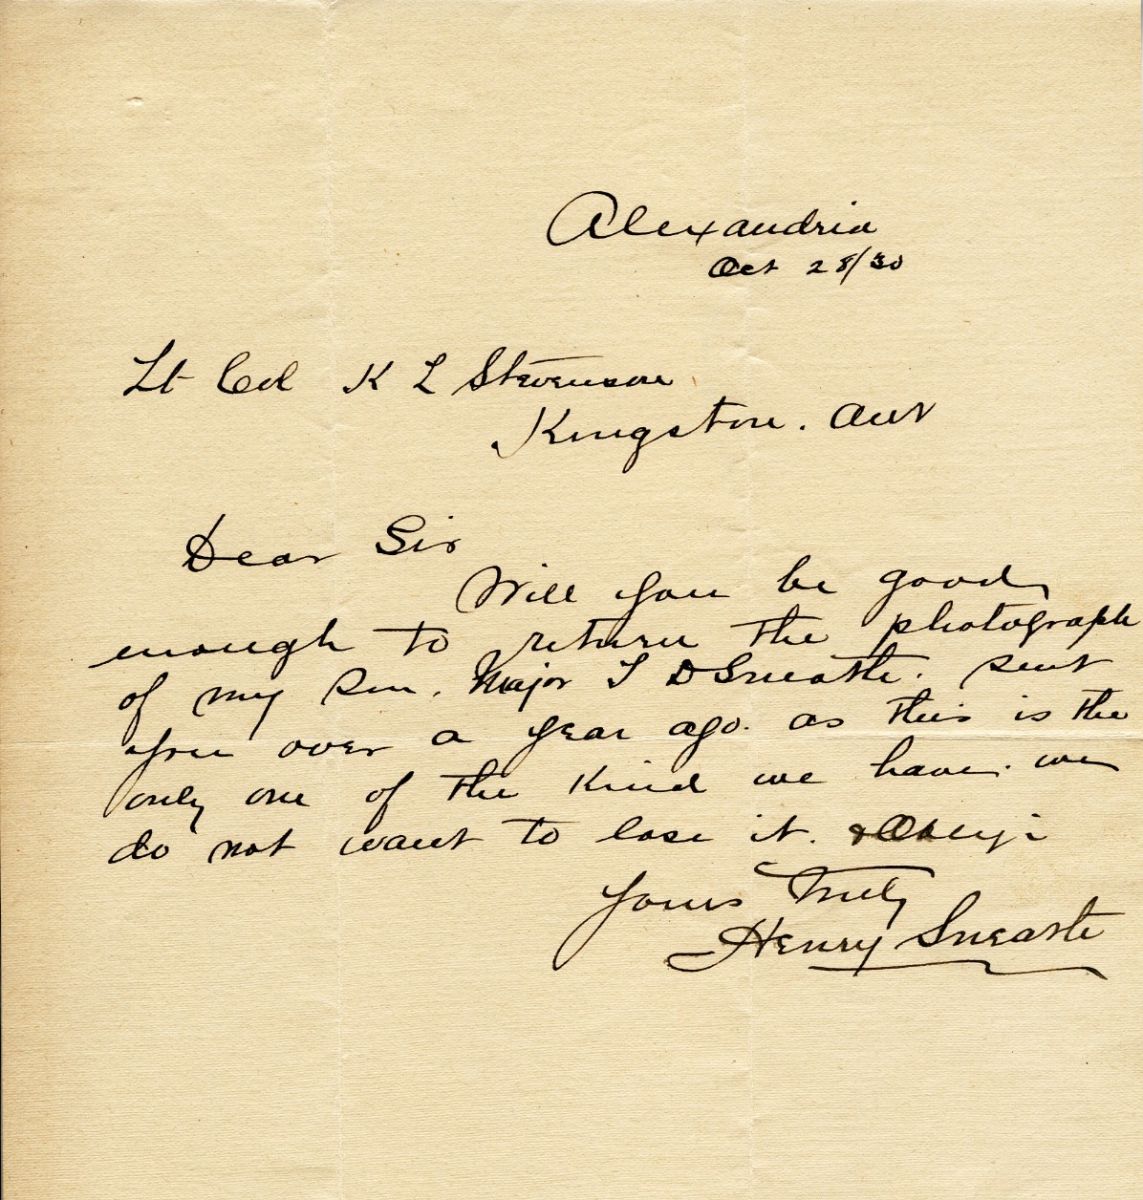 Letter from Henry Sneath to Lt. Col. K.L. Stevenson, 28th October 1930